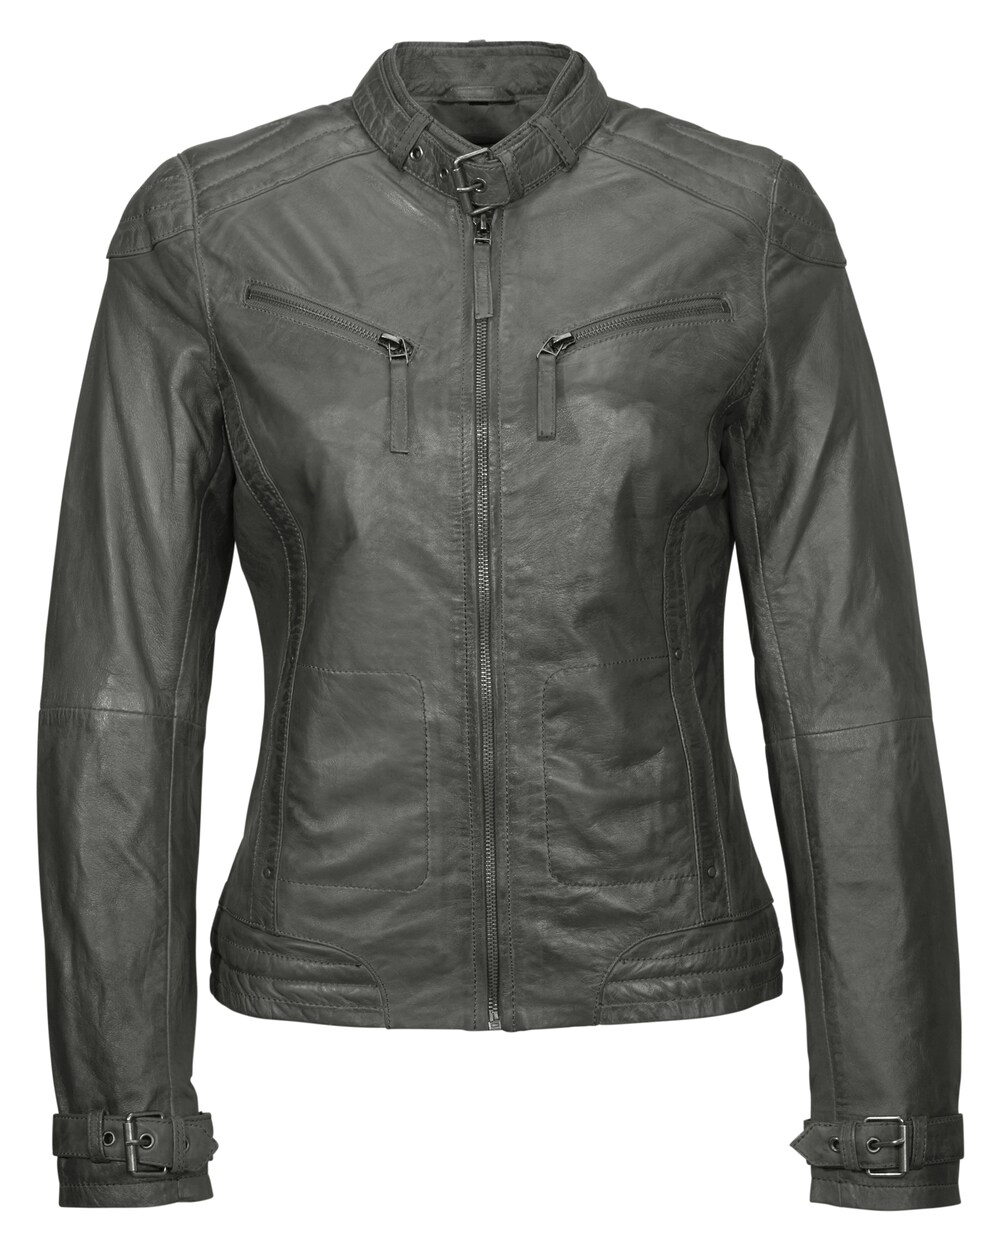 Межсезонная куртка MUSTANG Ryana, темно-серый межсезонная куртка mustang ryana коричневый